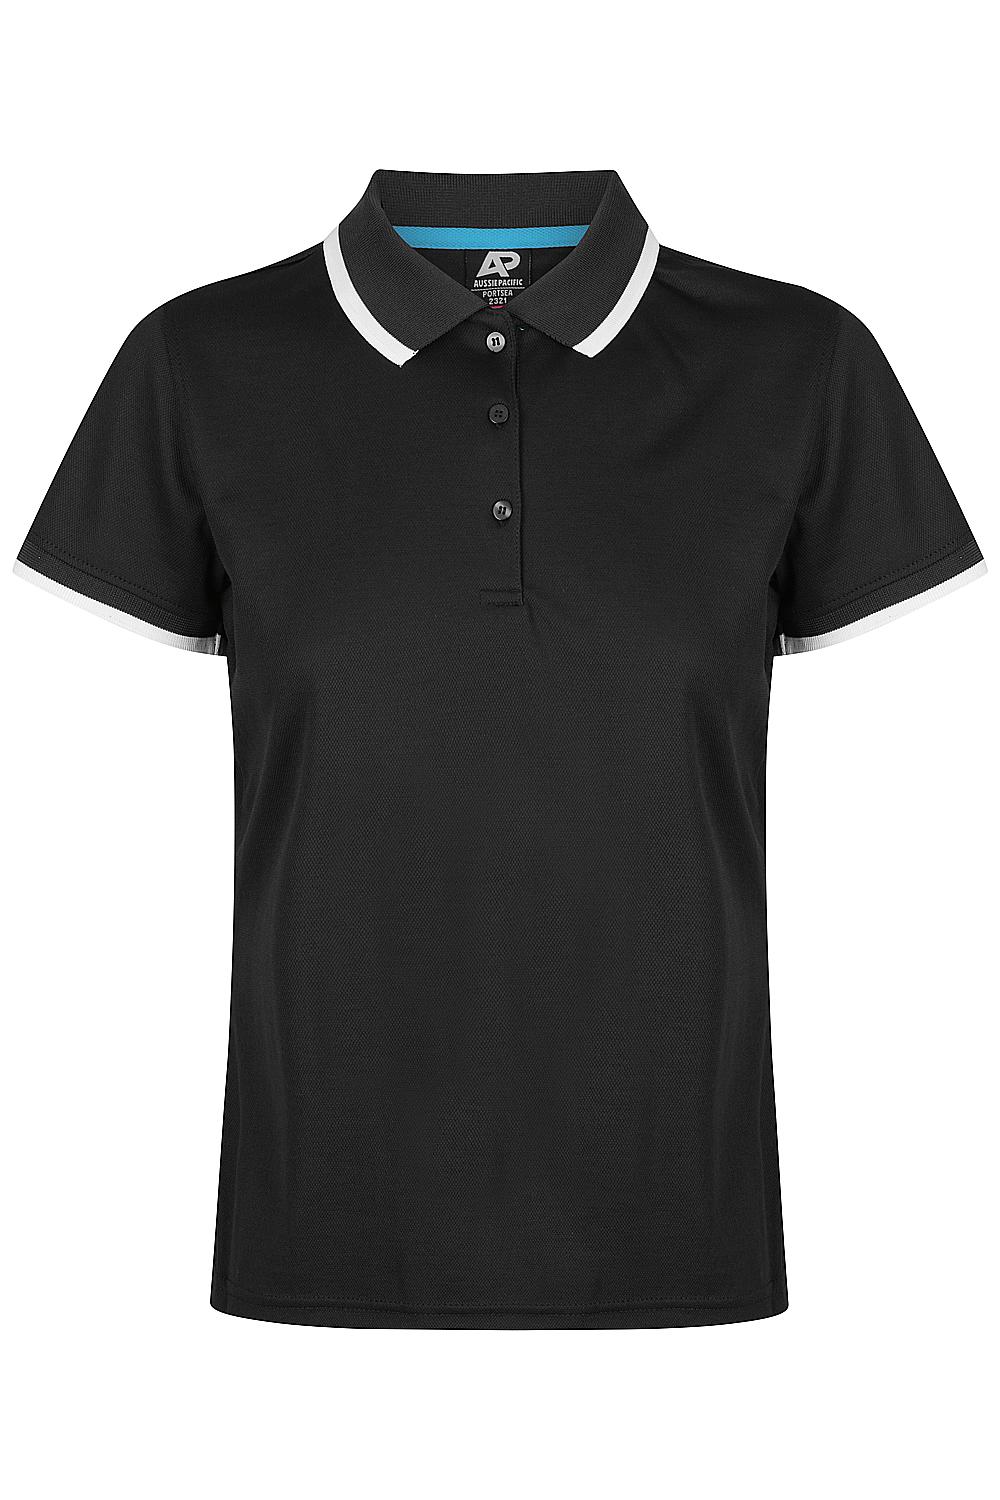 Custom Ladies Portsea Work Shirts - Black/White